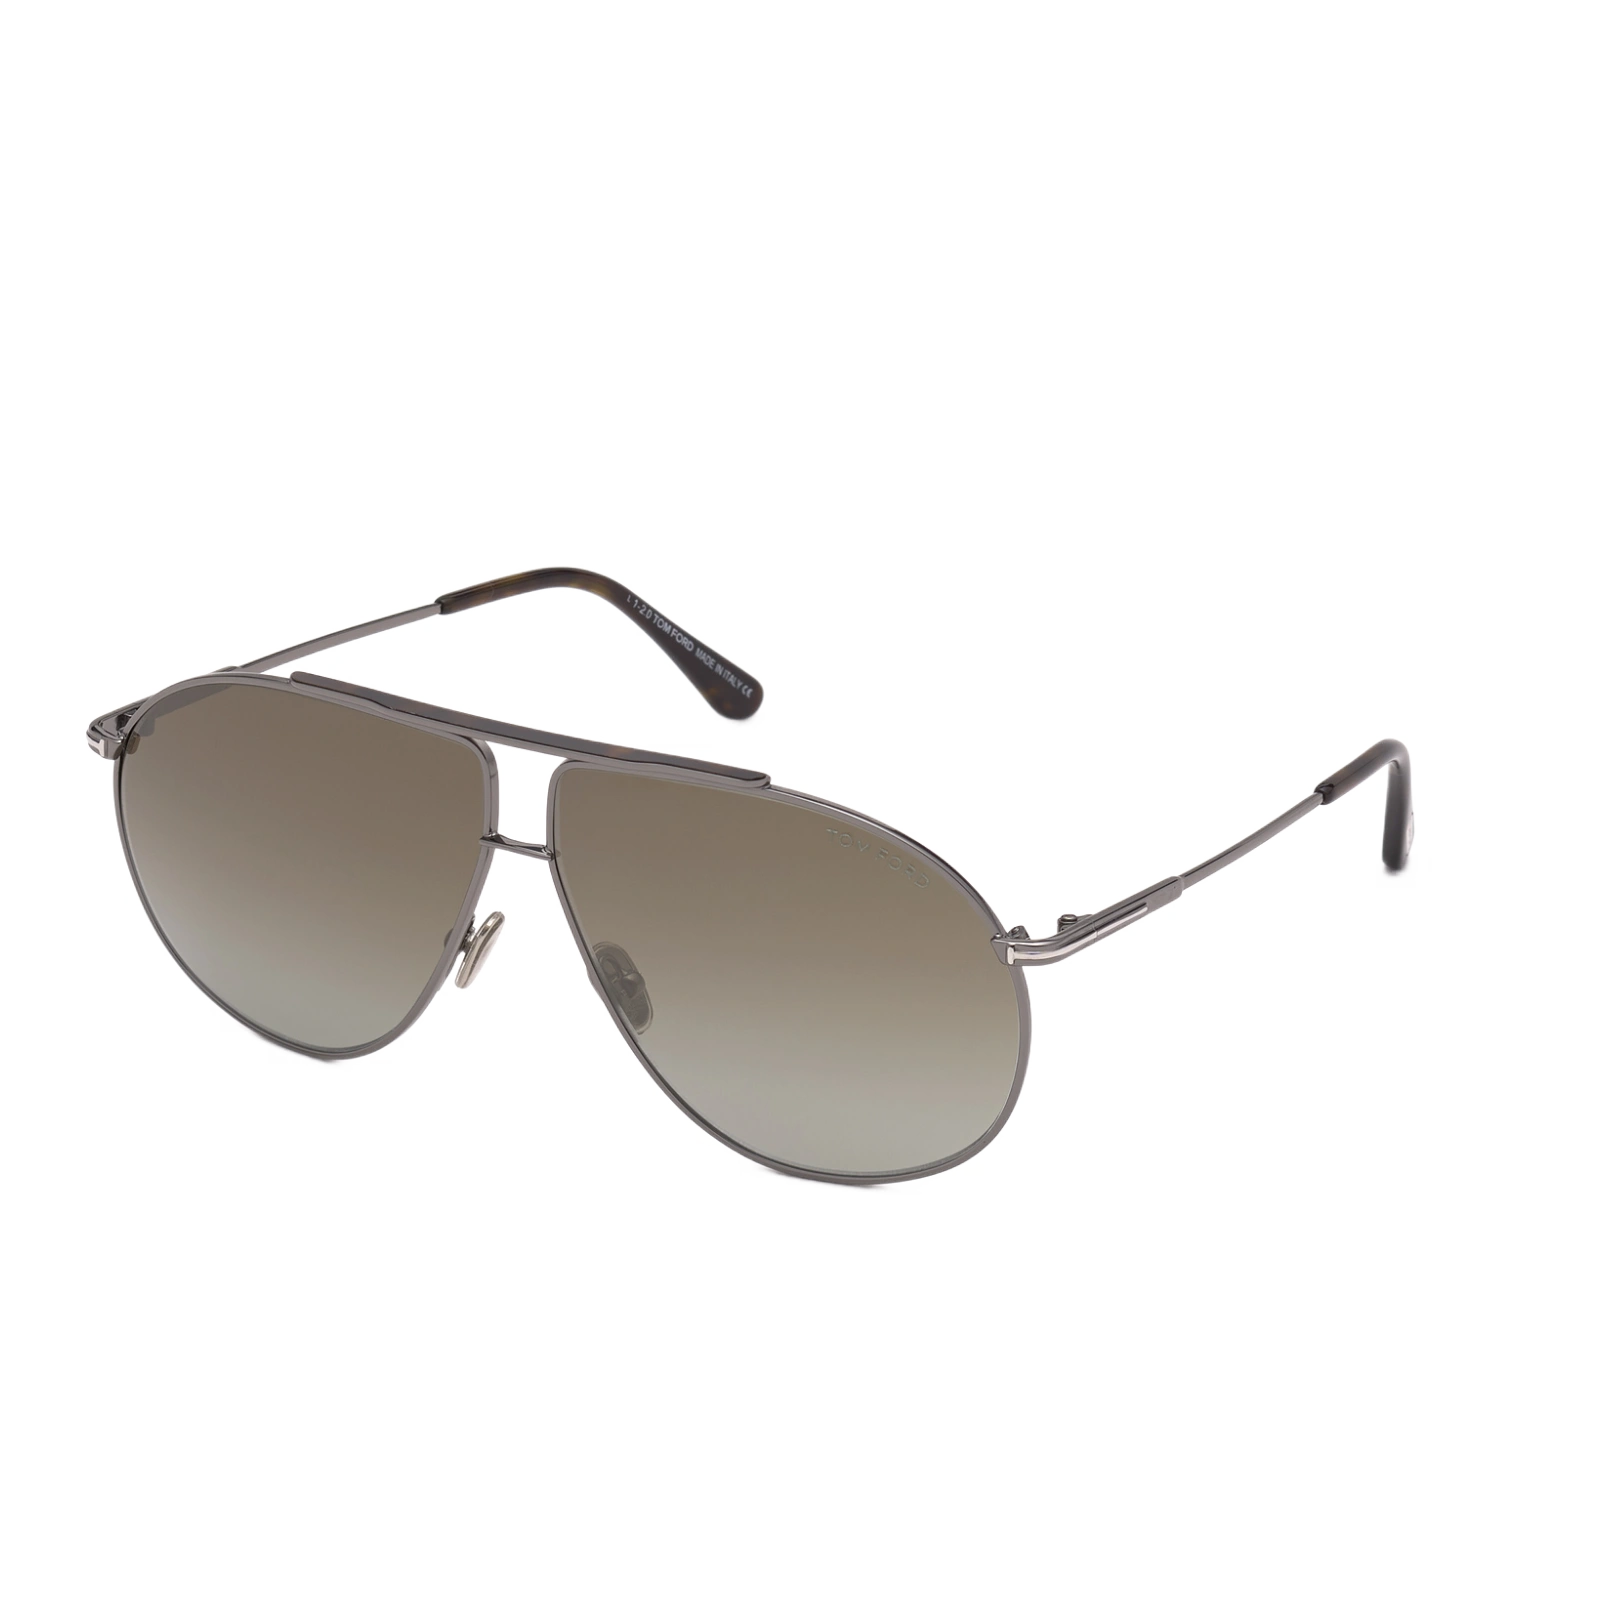 Tom Ford Sunglasses Tom Ford Sunglasses FT0825 12Q 62mm Riley-02 Eyeglasses Eyewear UK USA Australia 